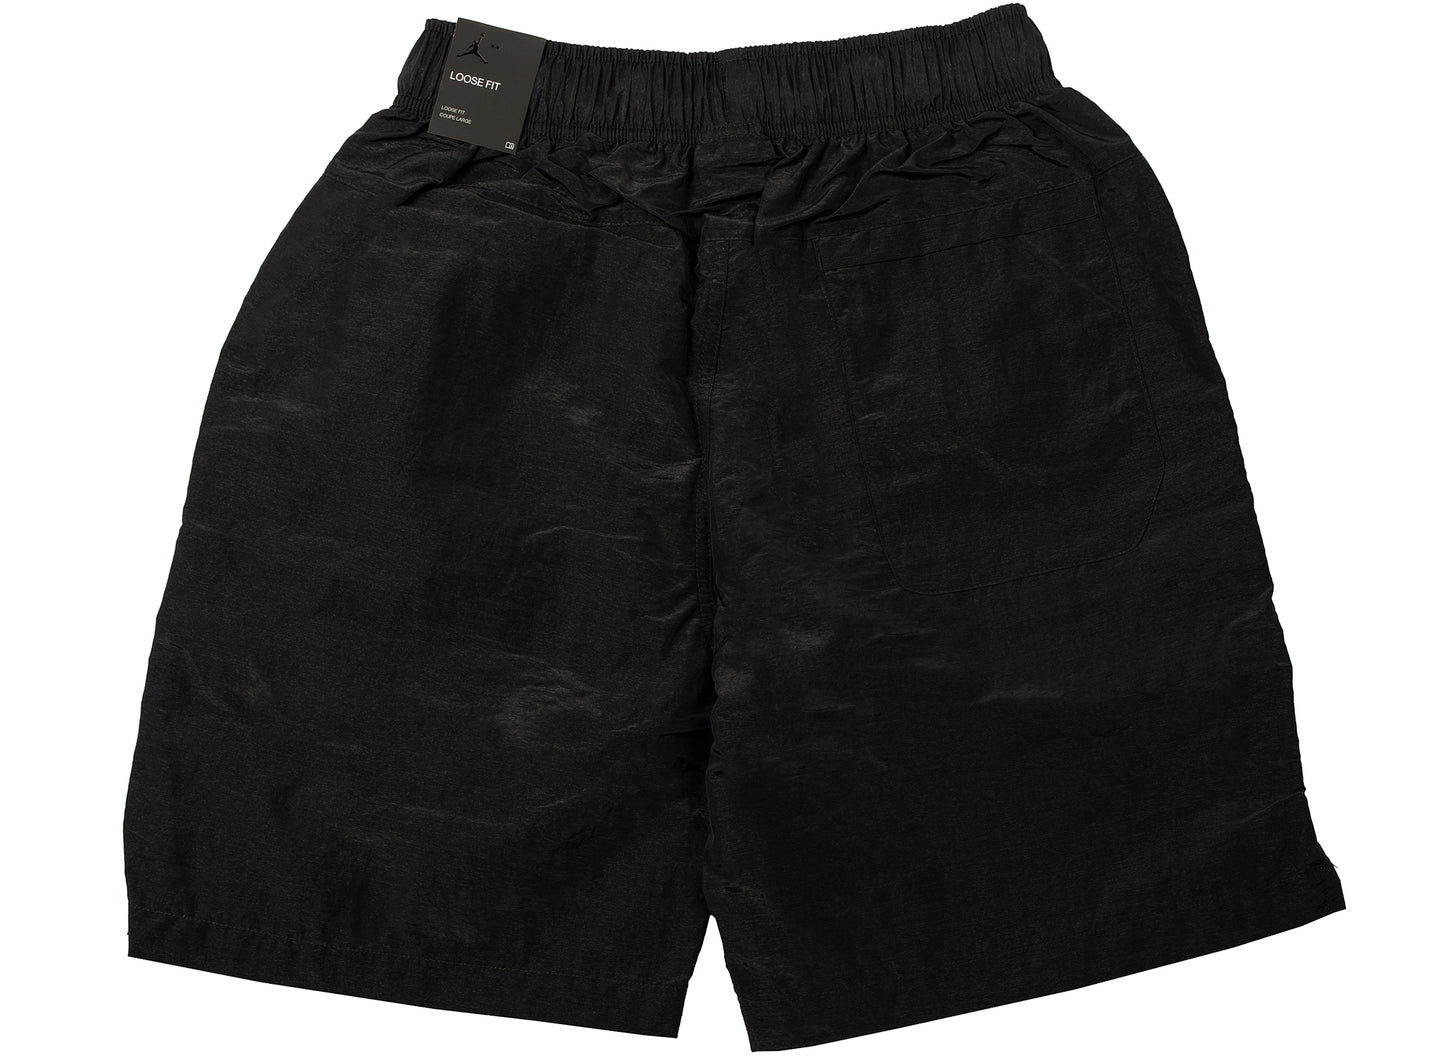 Jordan 23 Engineered Utility Shorts in Black